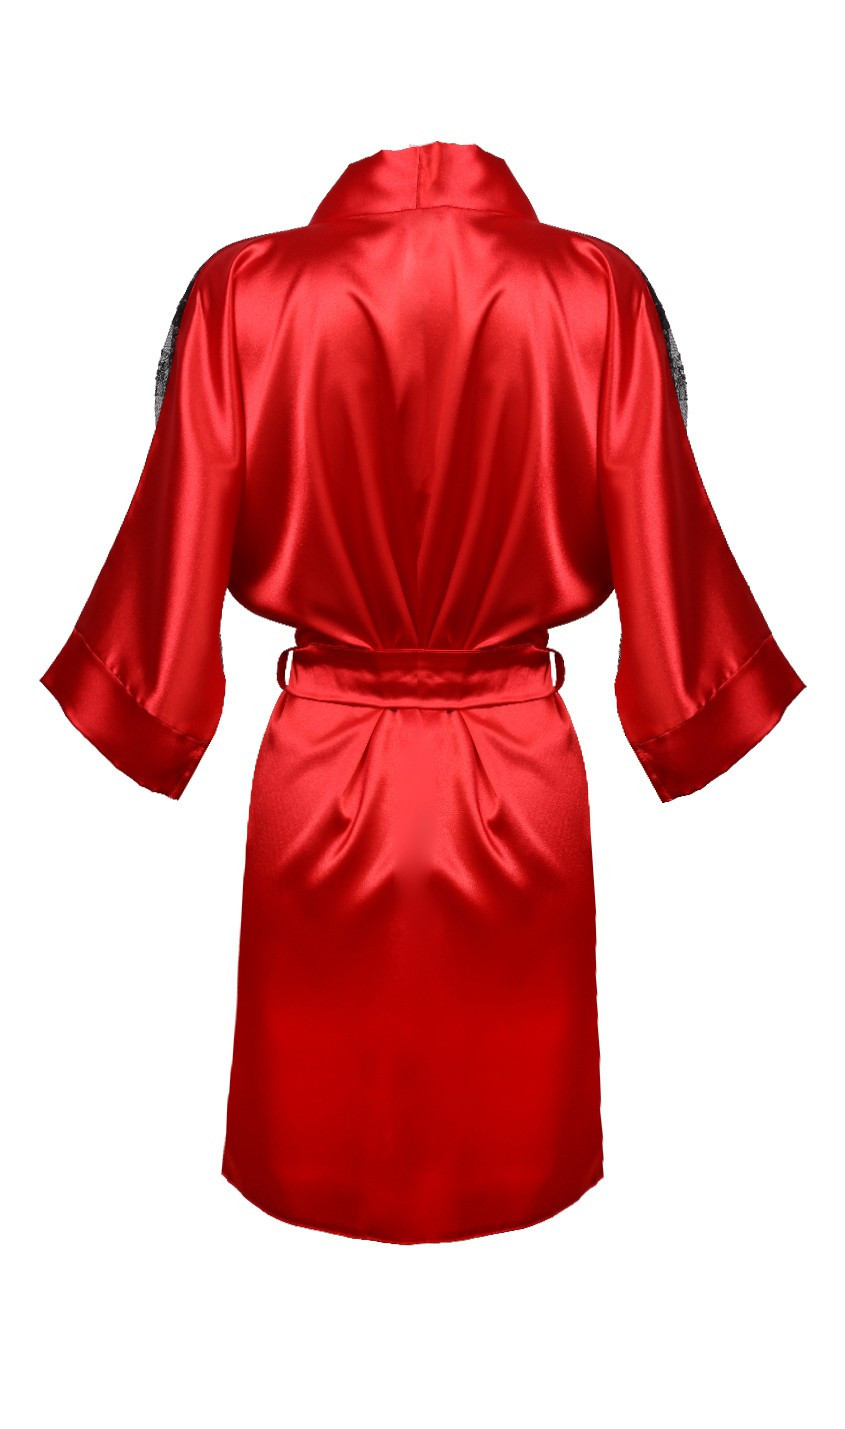 Housecoat model 18227042 Red - DKaren Velikost: XS, Barva: červená